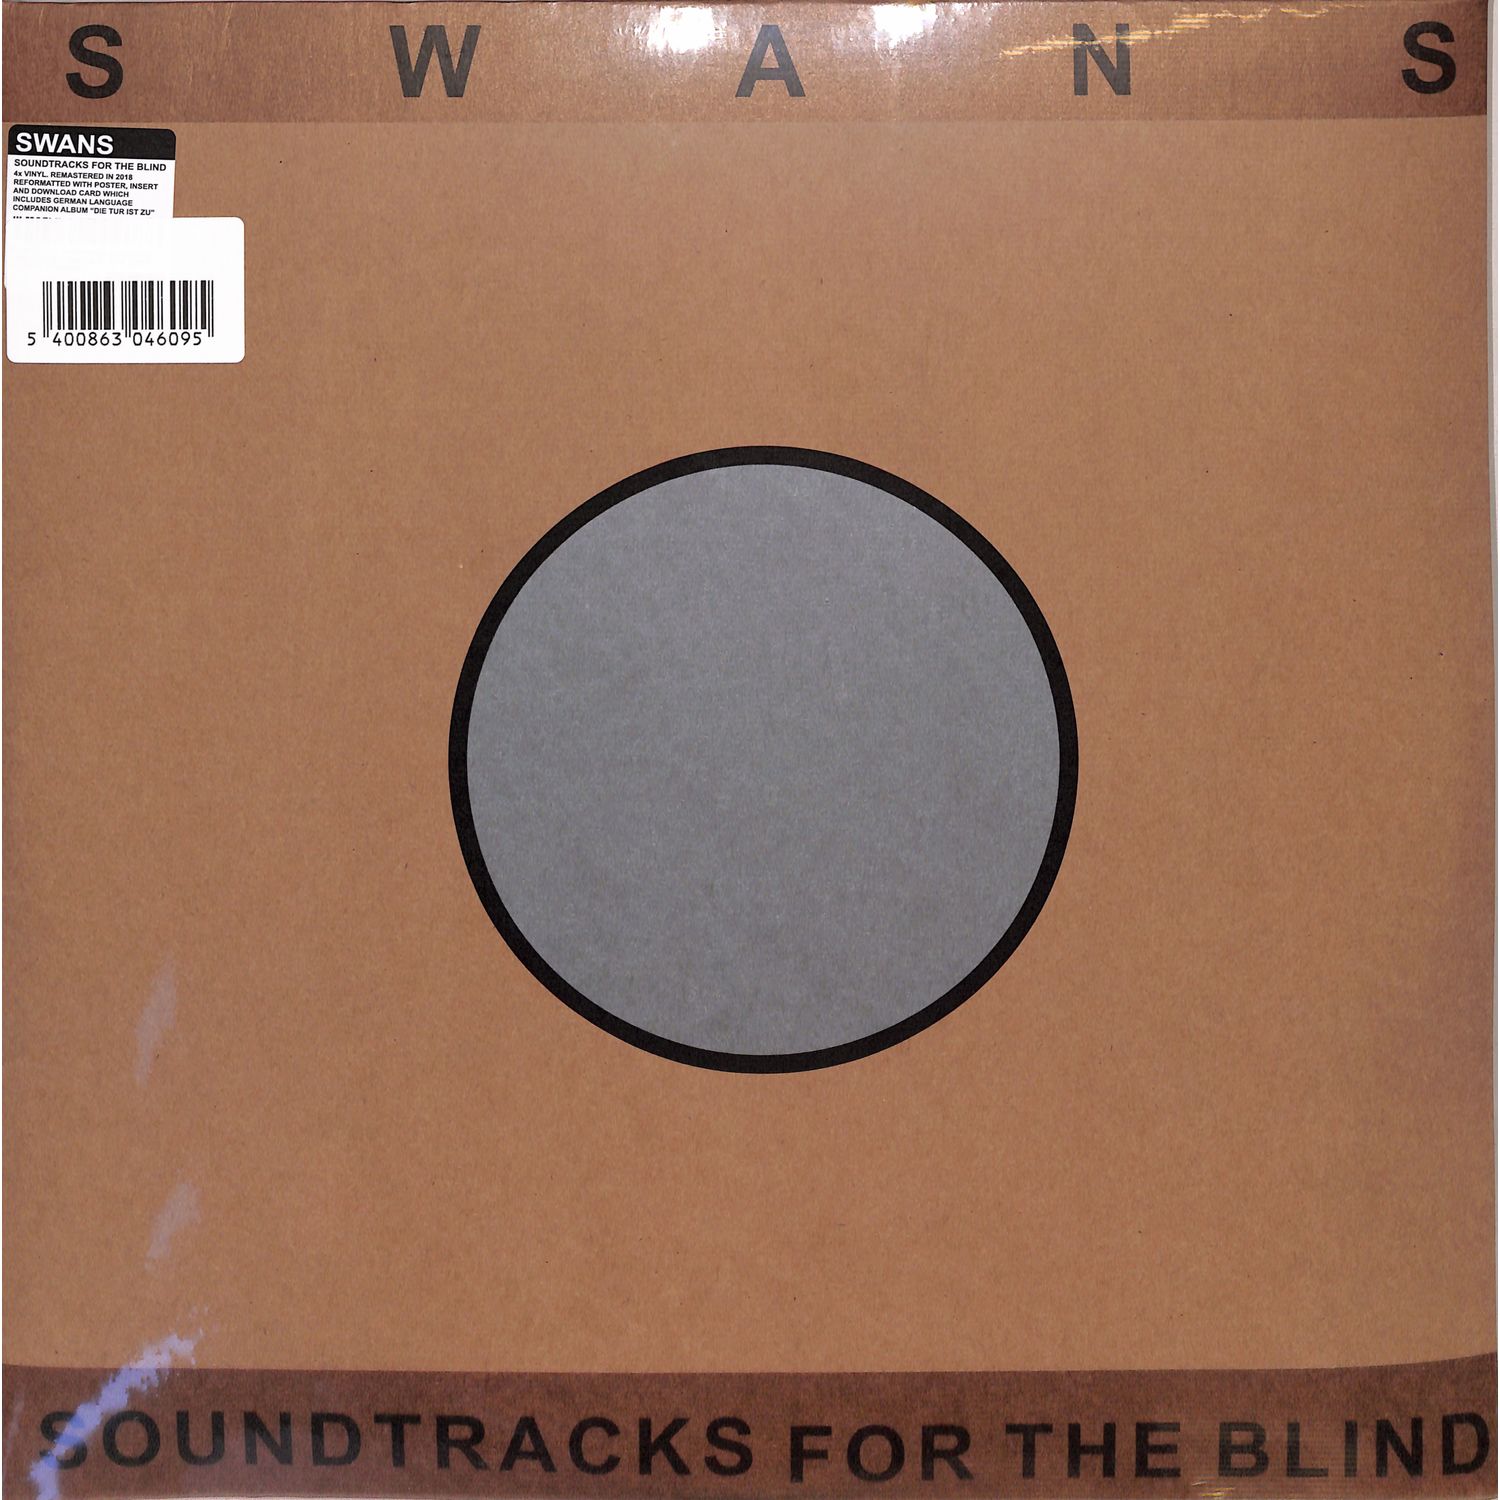 Swans - SOUNDTRACKS FOR THE BLIND 